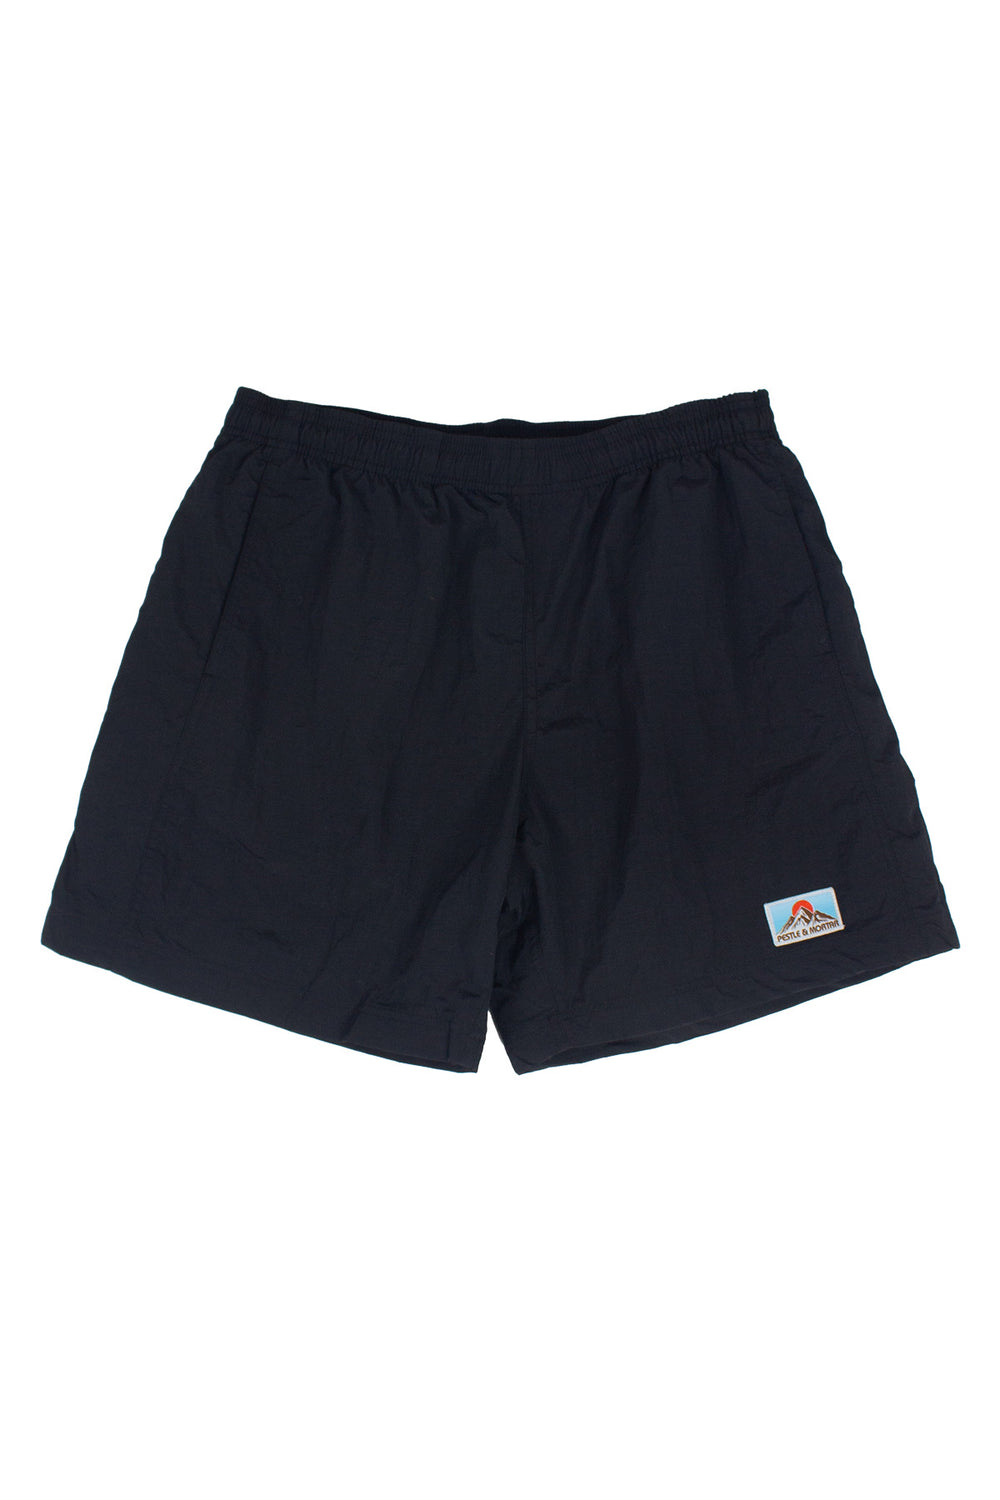 PMC | Mountaineering Nylon Shorts Black